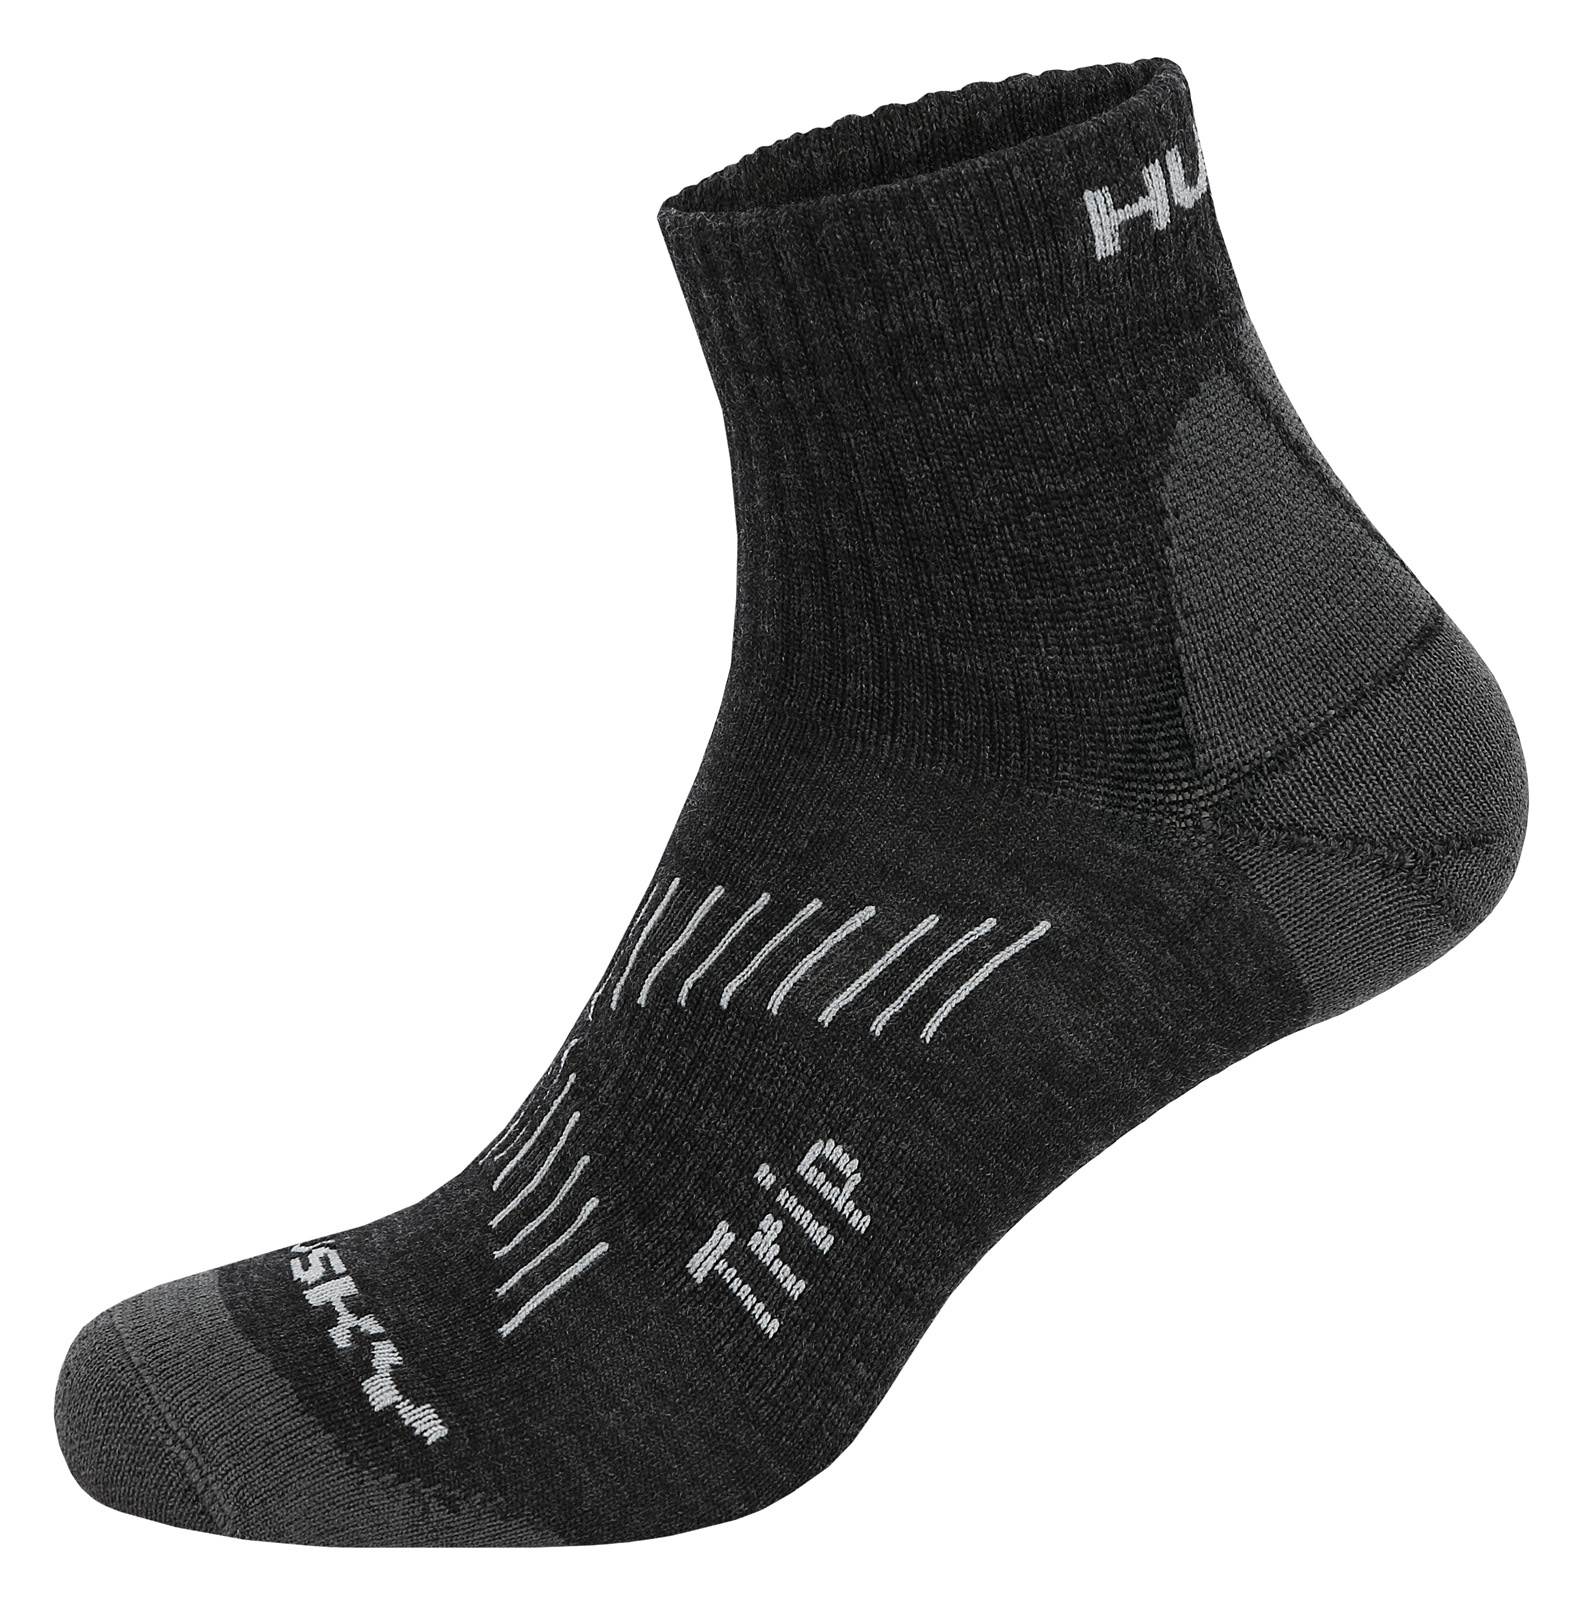 Husky Ponožky Trip tm. šedá Velikost: L (41-44) ponožky